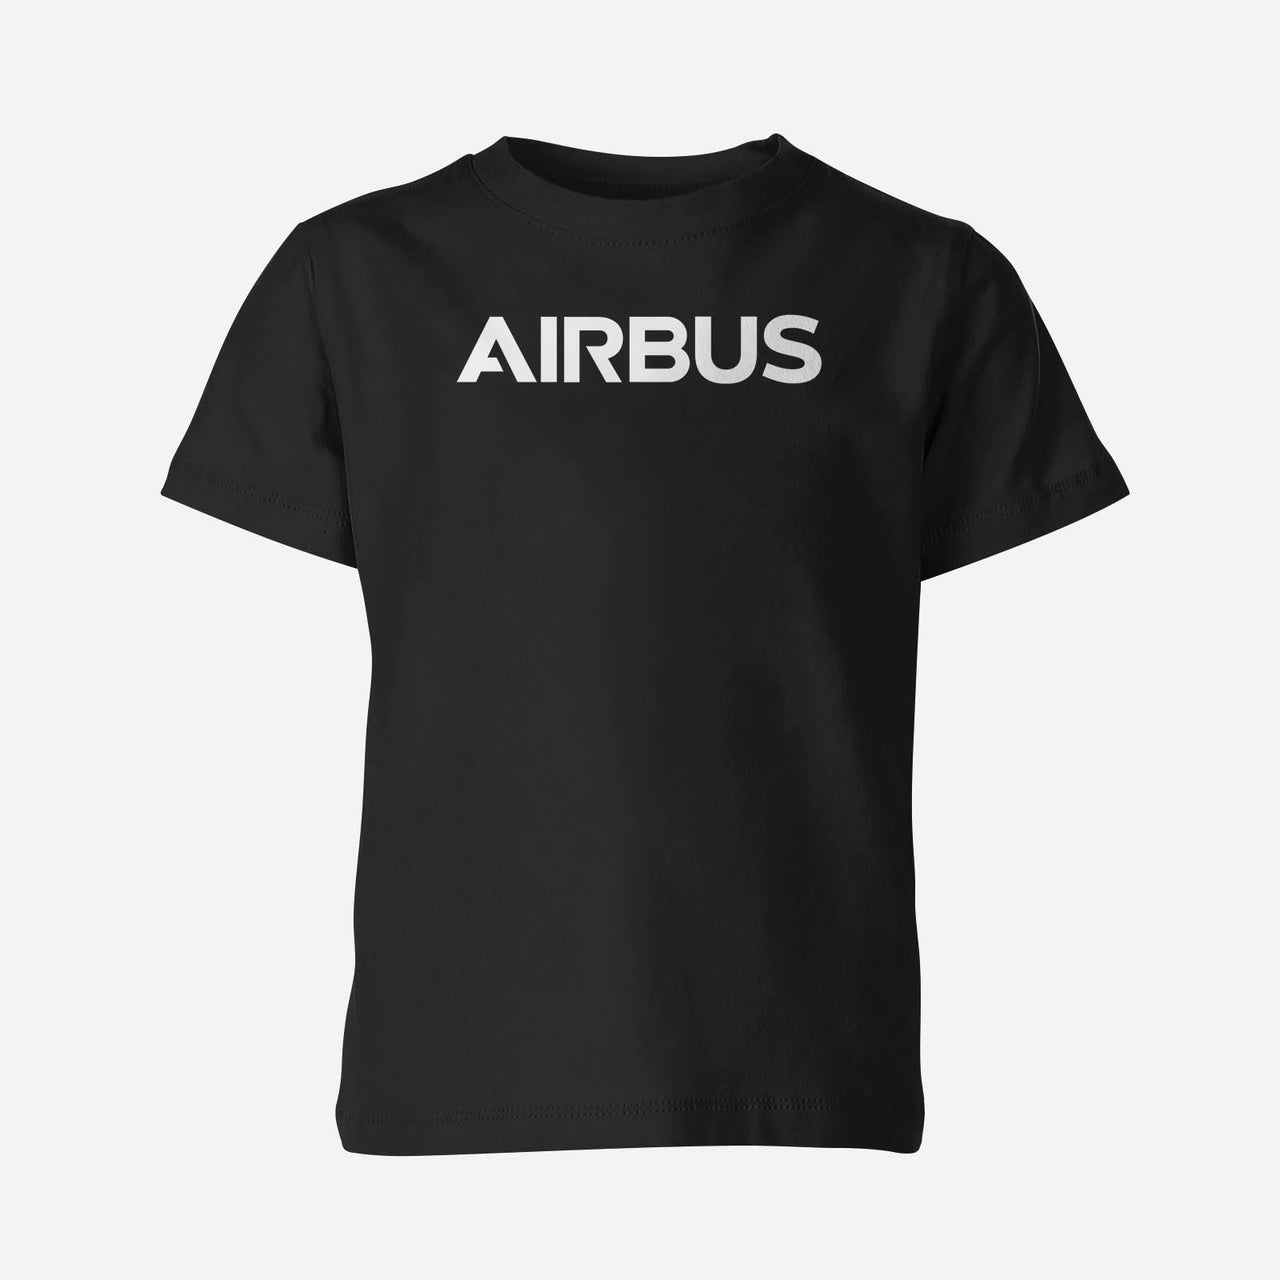 Airbus & Text Designed Children T-Shirts